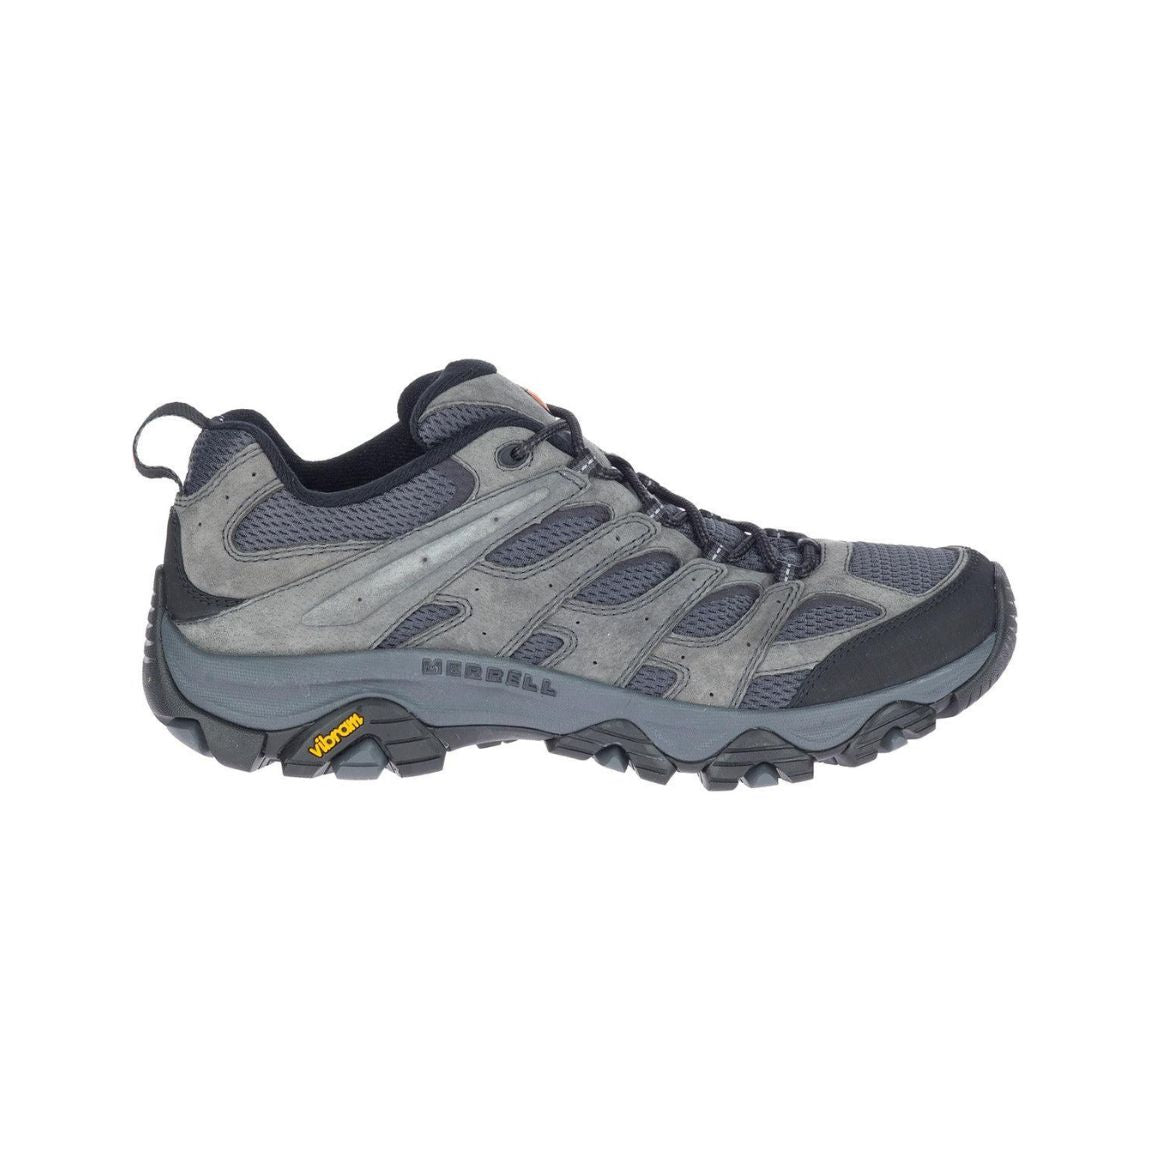 Moab 3 Hiking Shoes (Wide Width) - Men